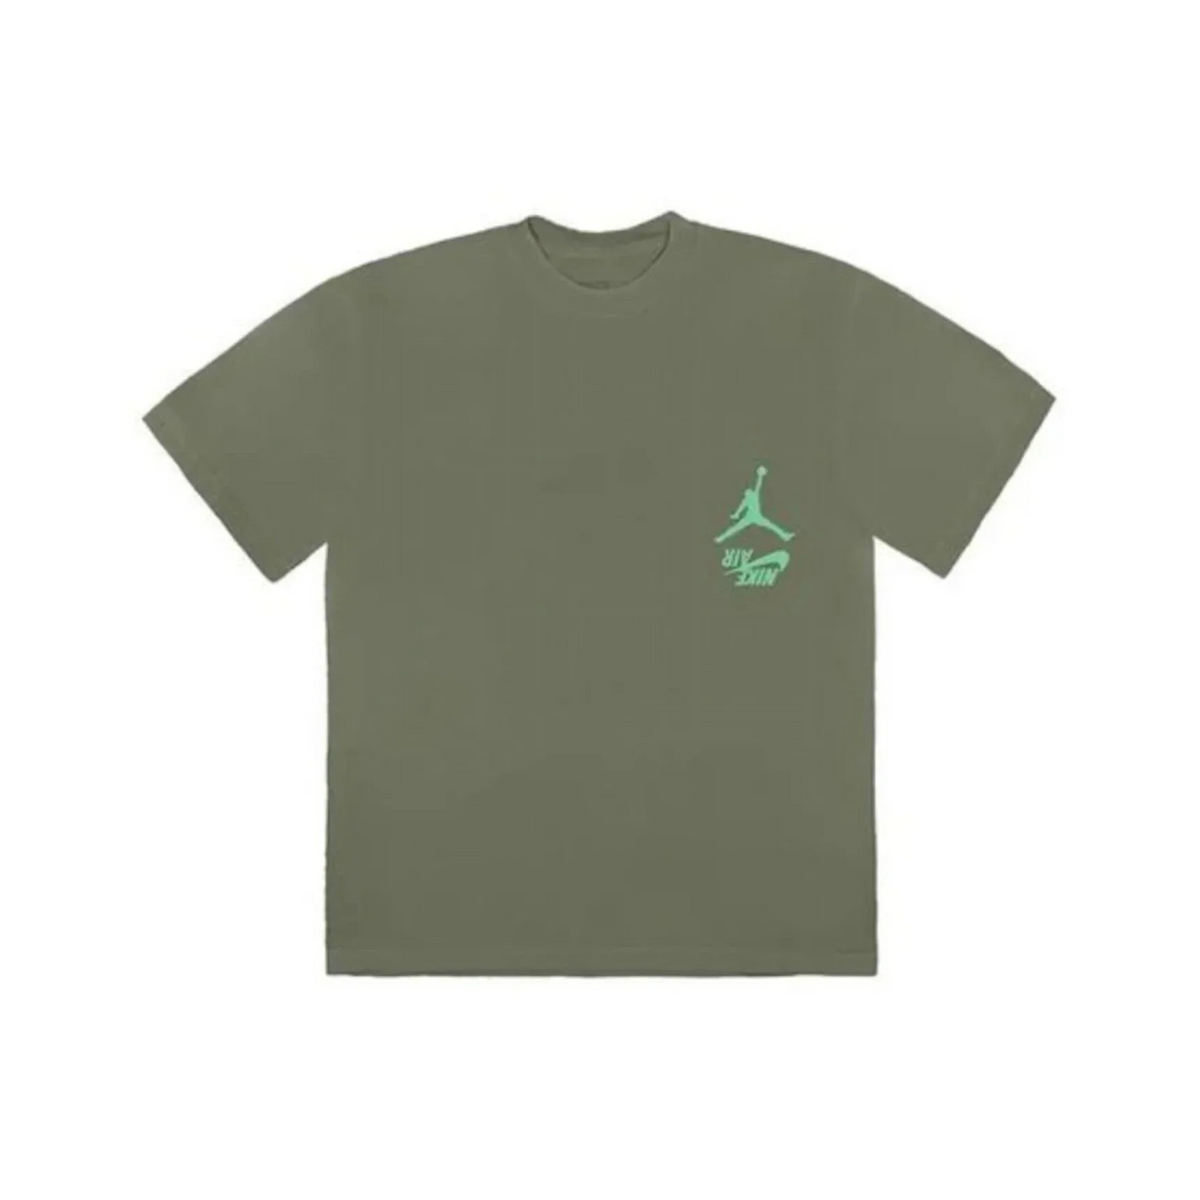 Travis Scott Nike Air Jordan Cactus Jack Highest T Shirt "Olive"